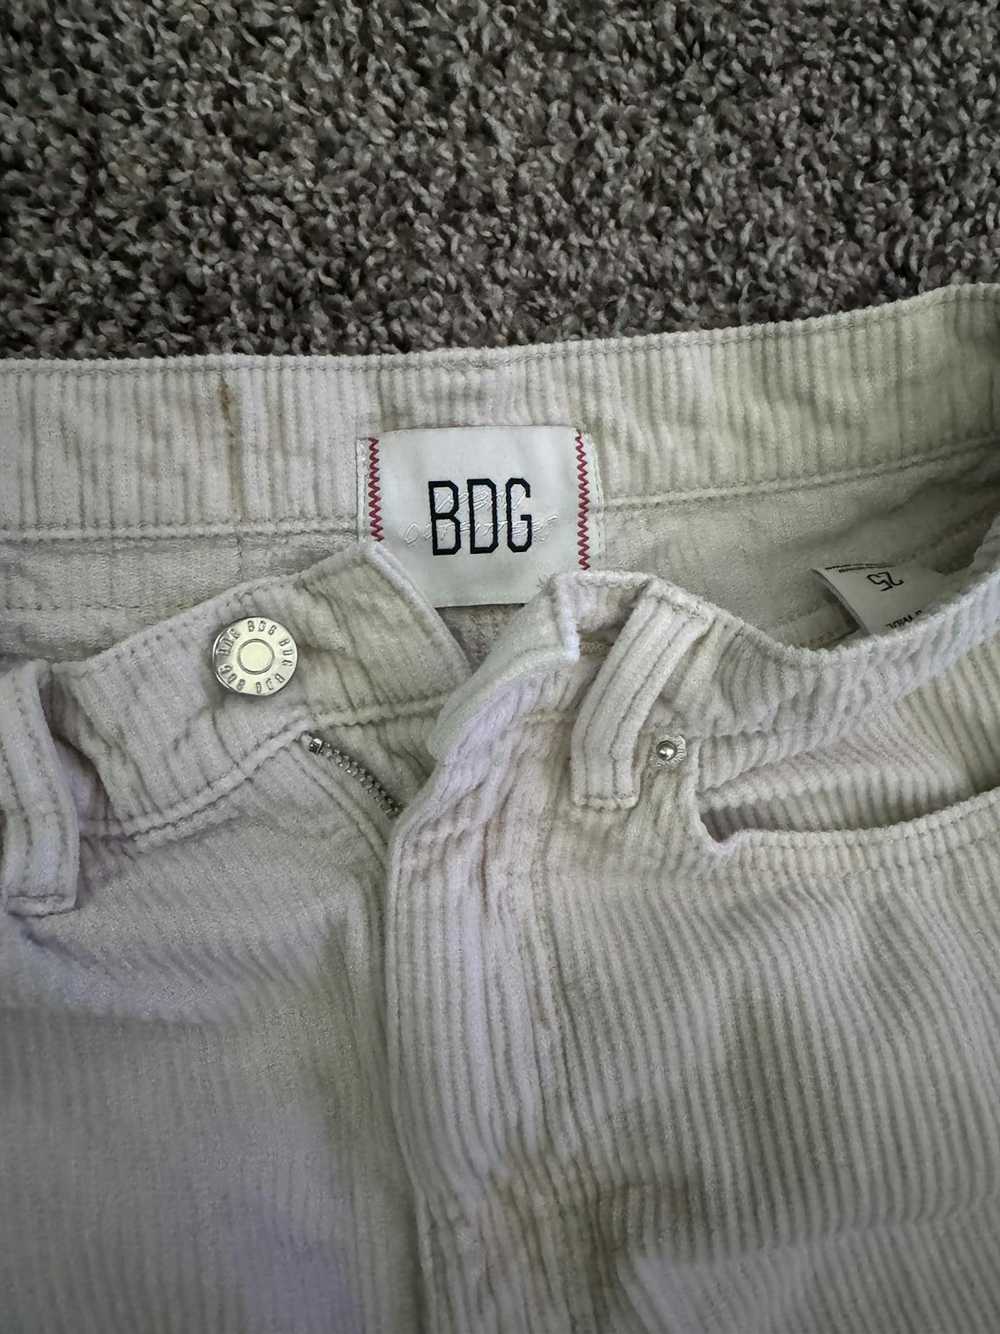 Bdg Urban Outfitter BDG Corduroy Pants - image 4